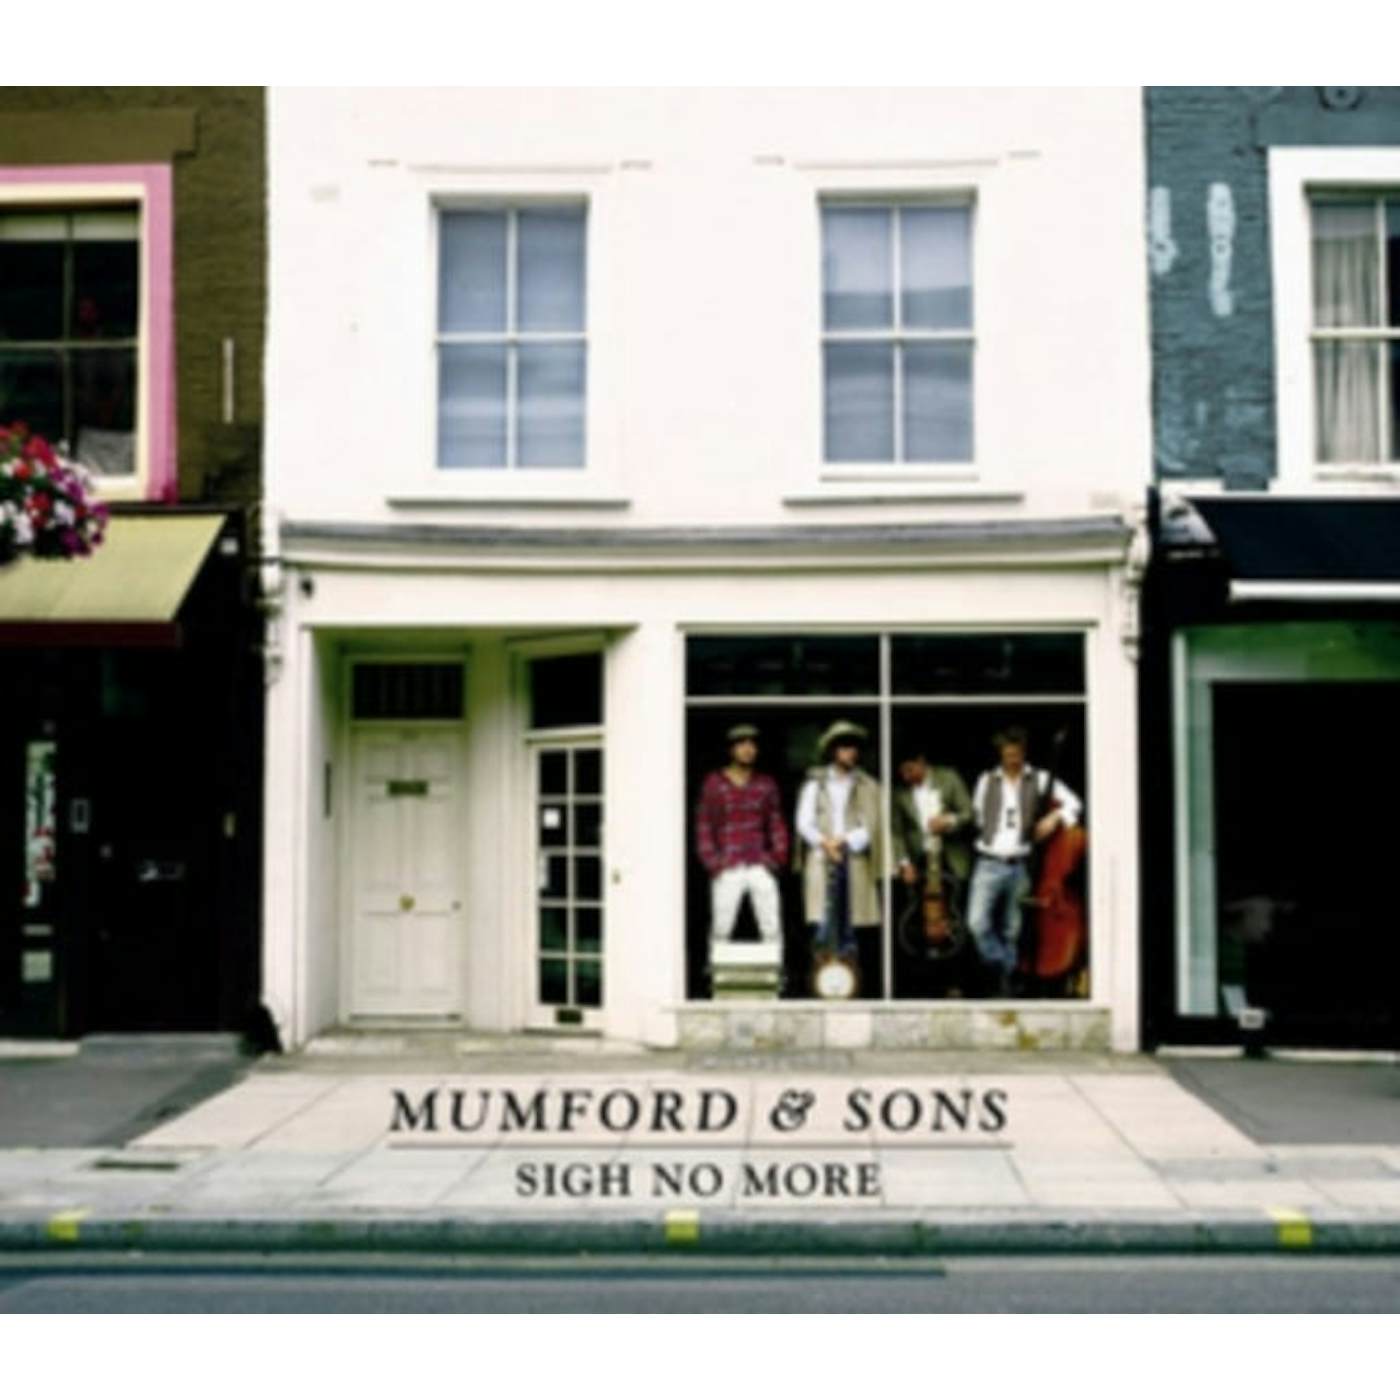 Mumford & Sons LP Vinyl Record - Sigh No More